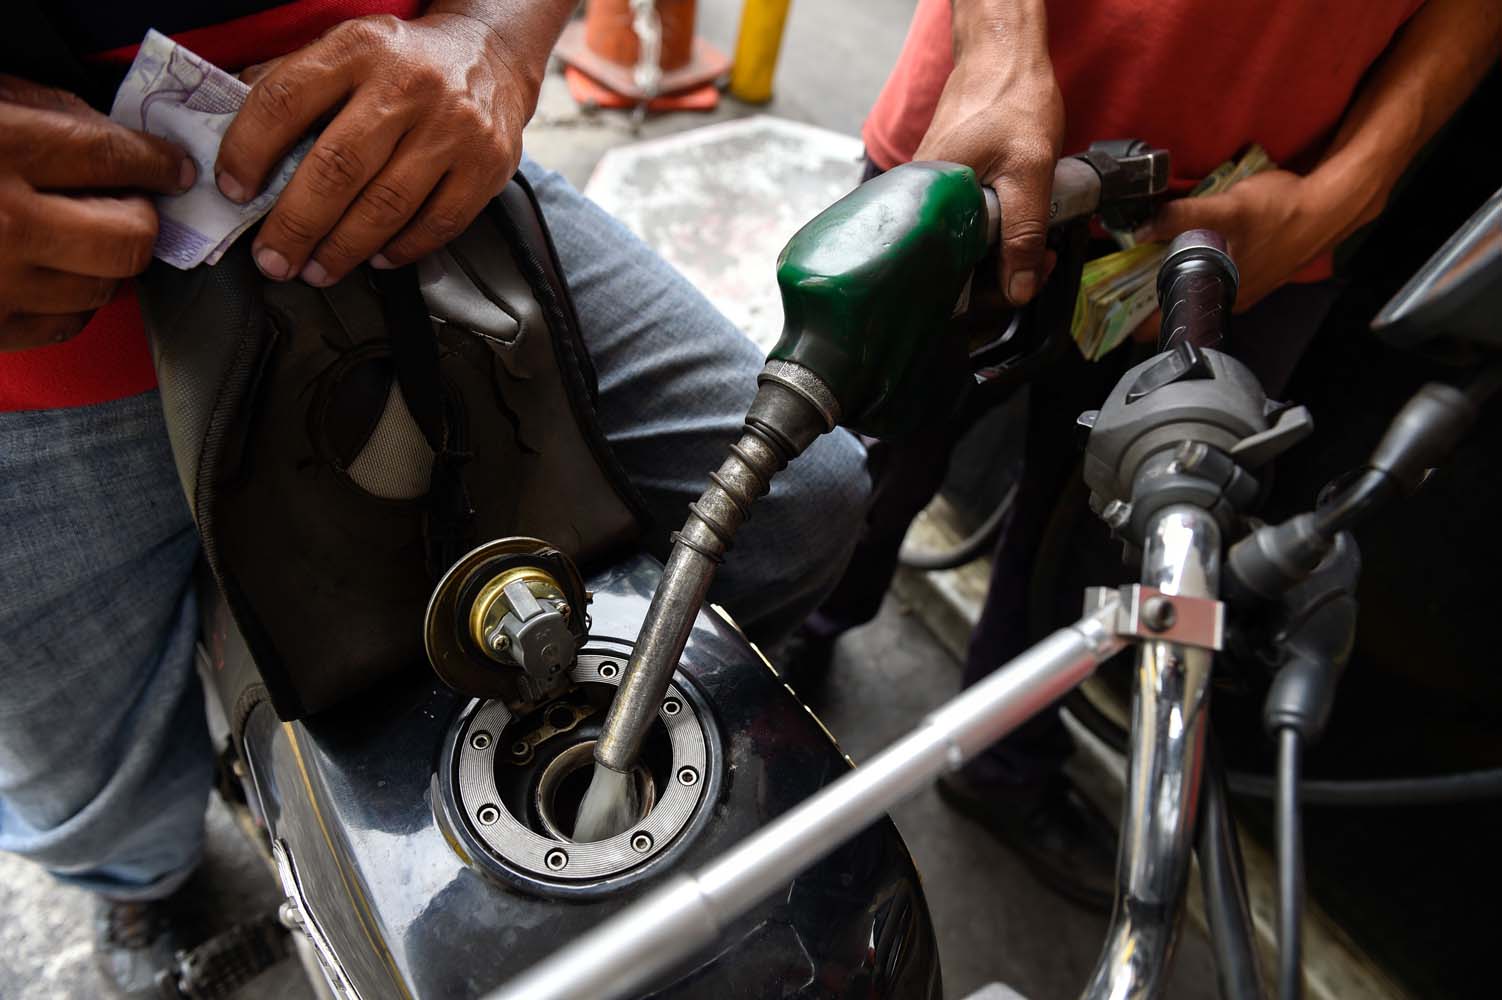 Venezolanos están pagando 1.000 BsF por tanque de gasolina #20Ago (tuits)